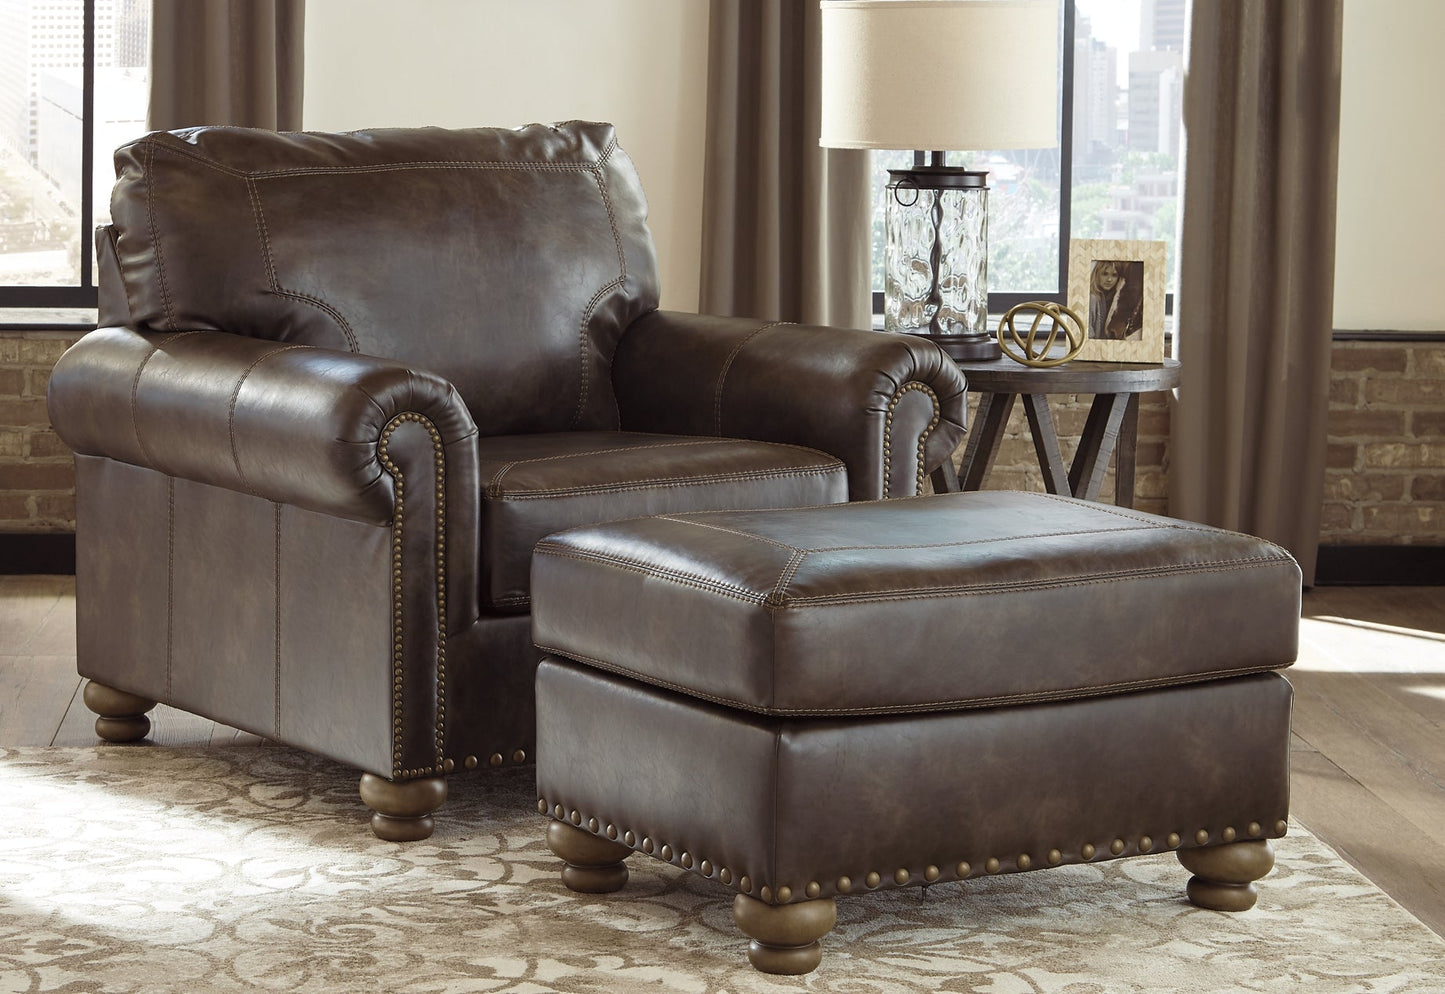 Nicorvo Chair and Ottoman at Cloud 9 Mattress & Furniture furniture, home furnishing, home decor